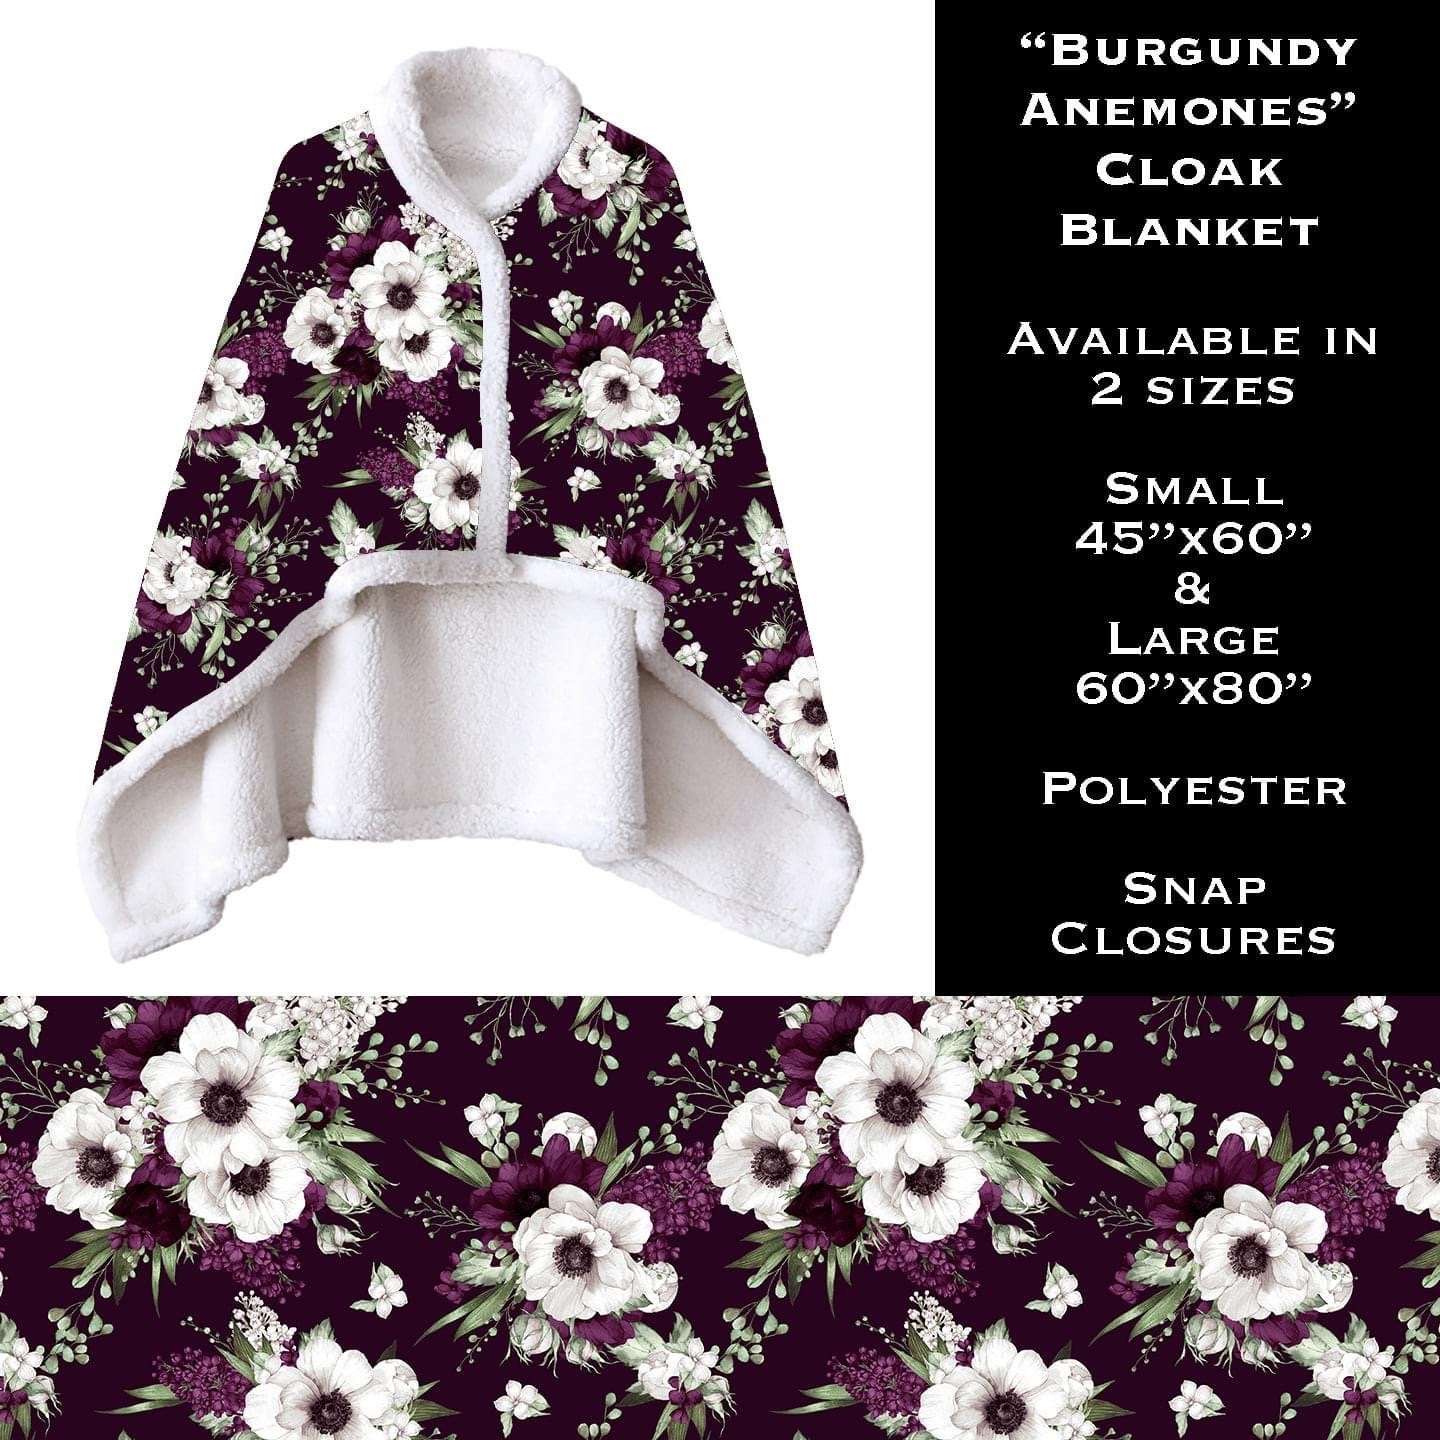 Burgundy Anemones - Cloak Blanket